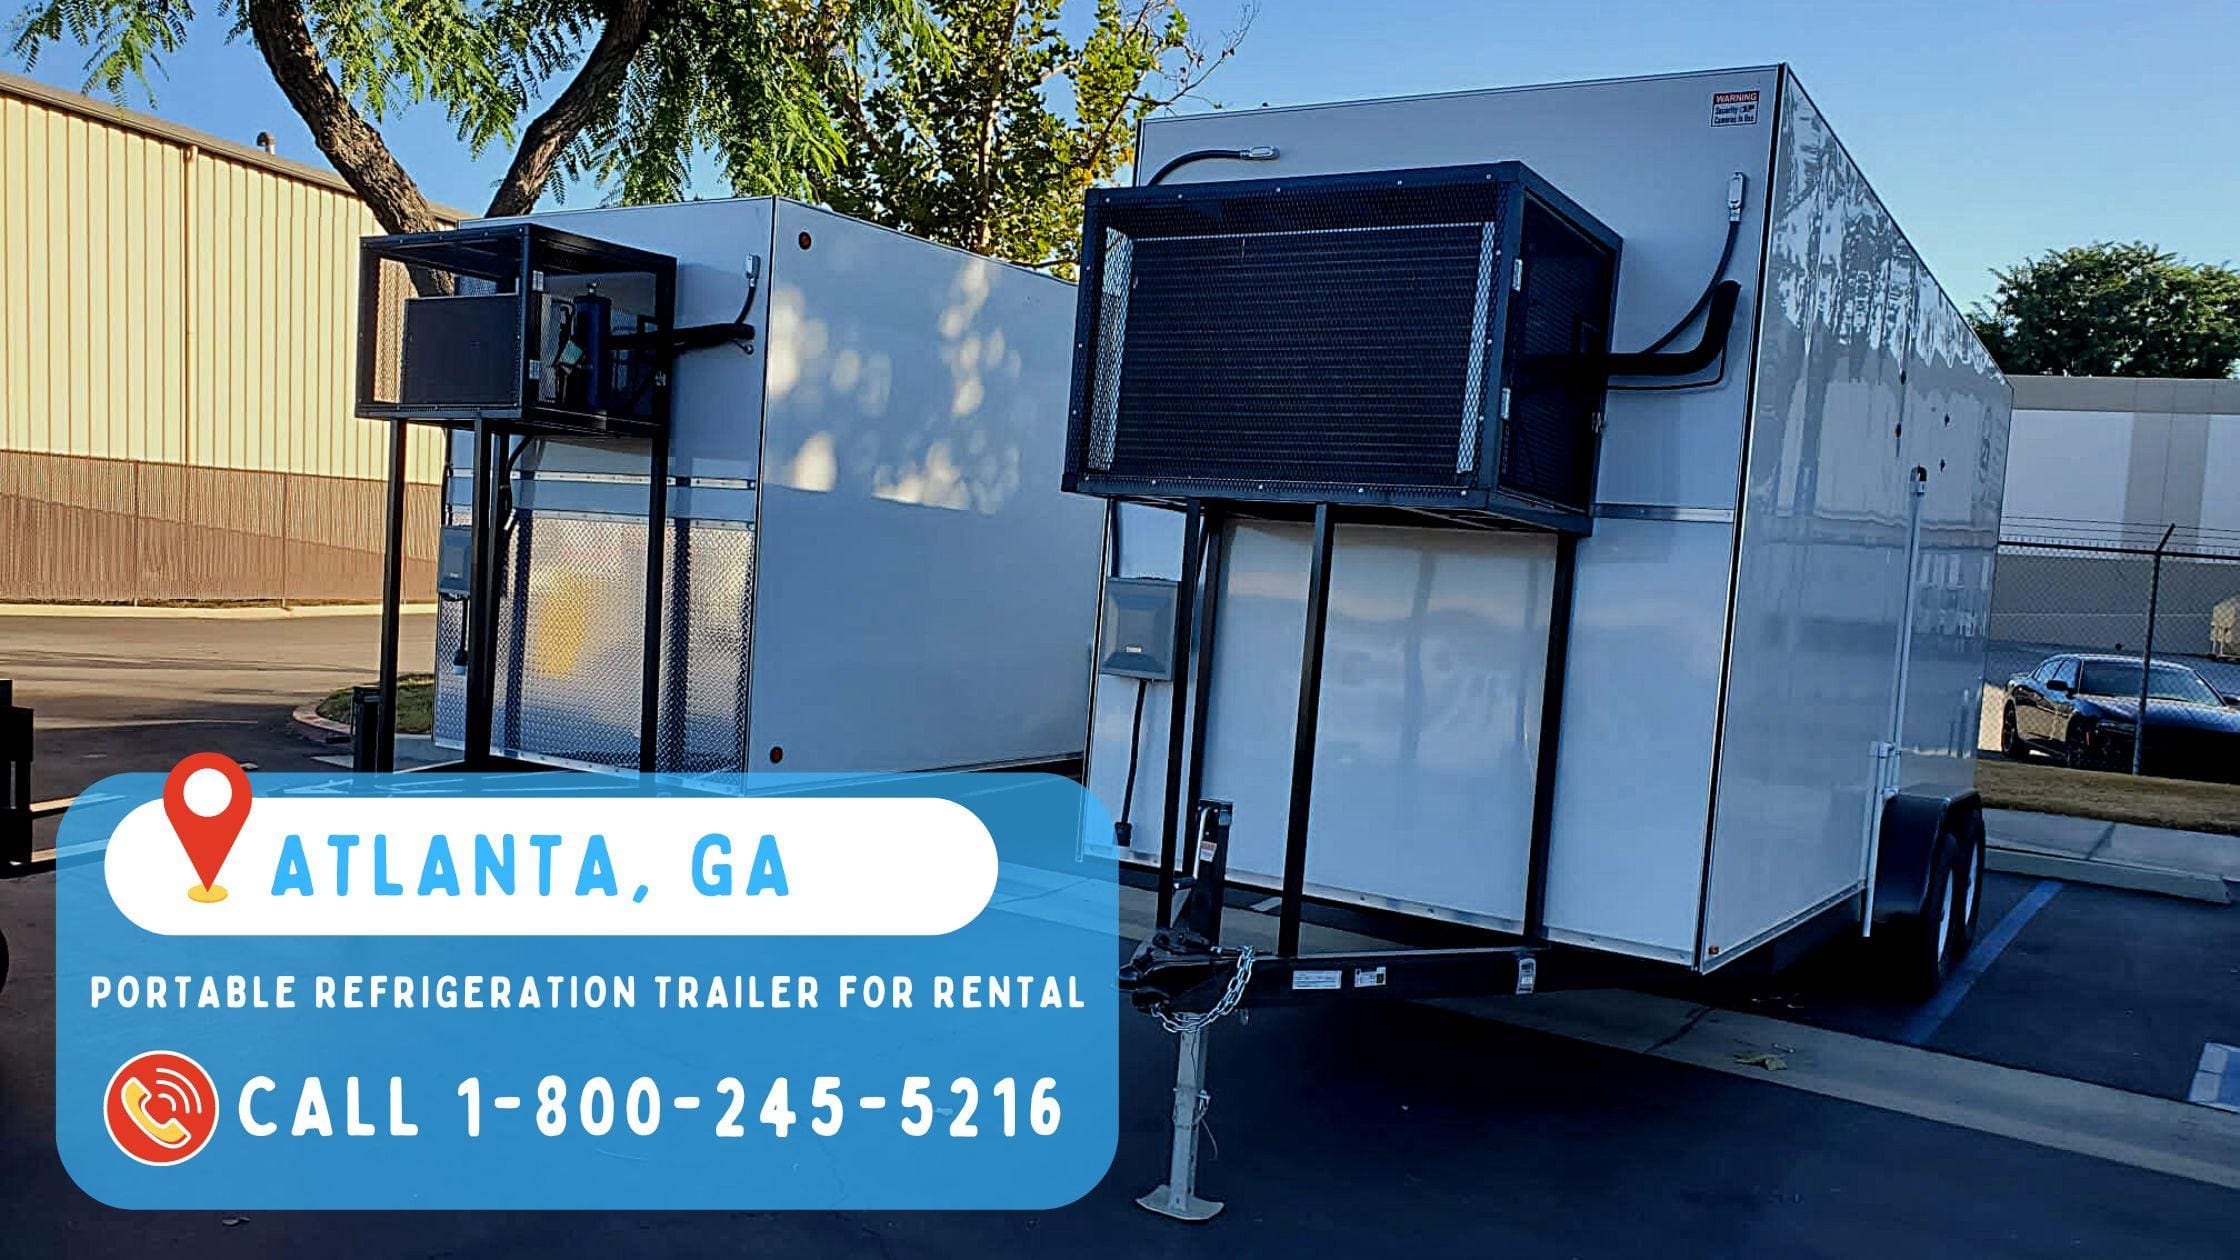 Portable Refrigeration Trailer for Rental in Atlanta